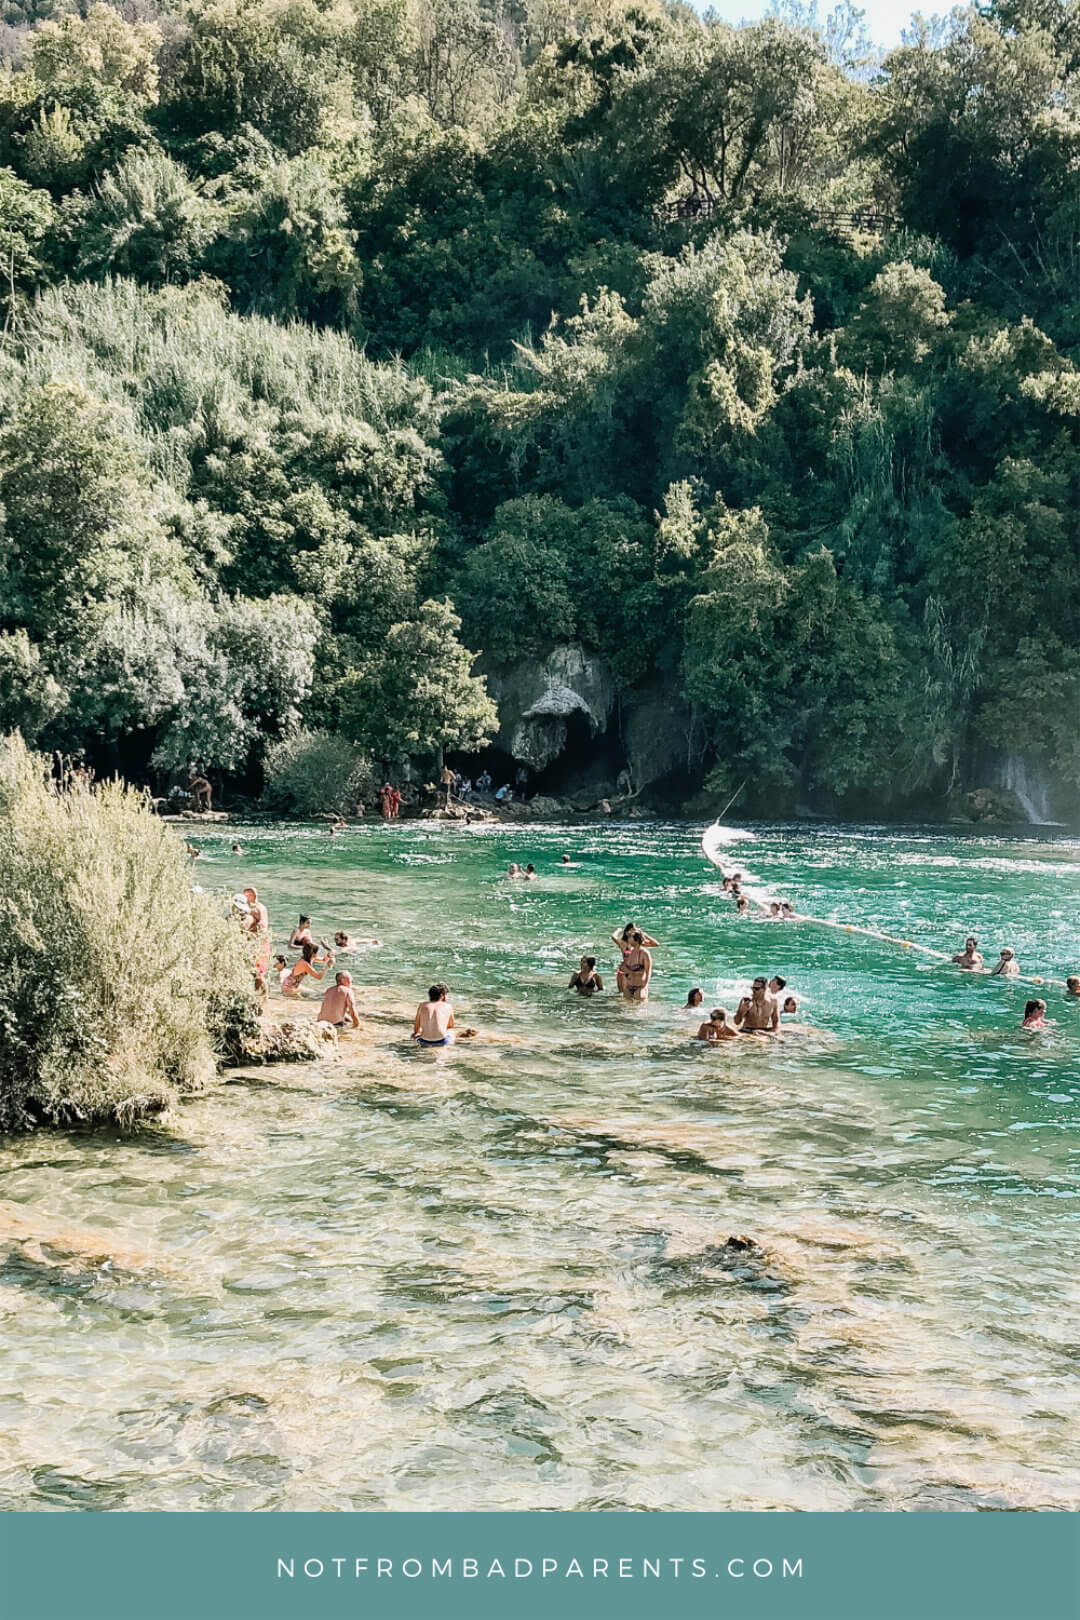 Pin Krka Nationalpark Kroatien Wasserfälle Reisen mit Kindern Familien